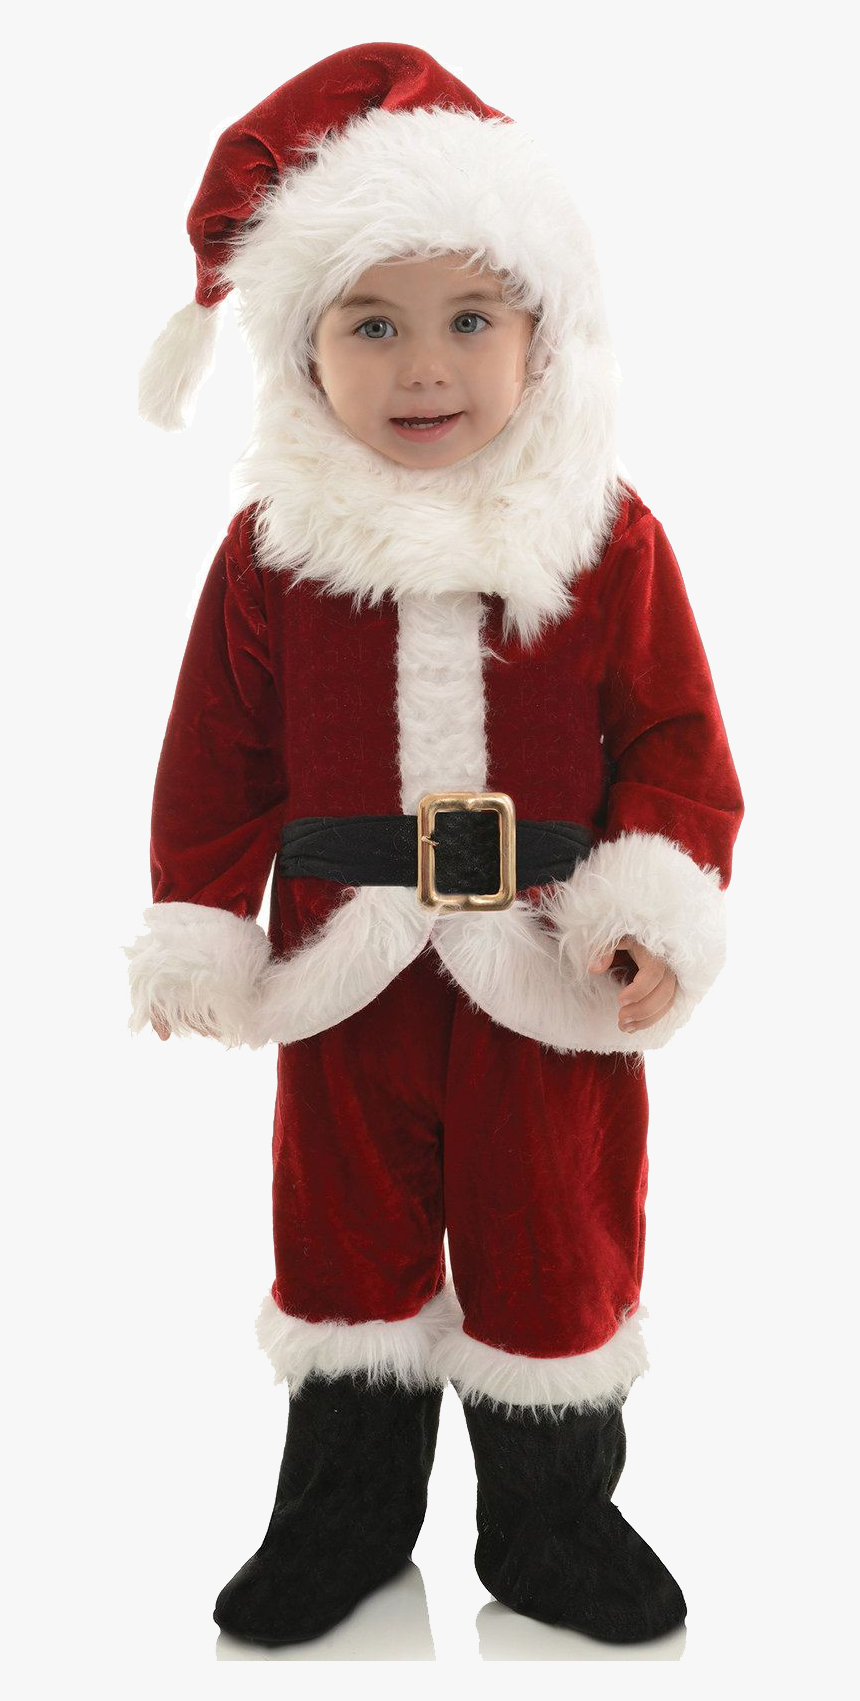 Christmas Baby Png Transparent Background - Weihnachtsmann Kostüm Kinder, Png Download, Free Download